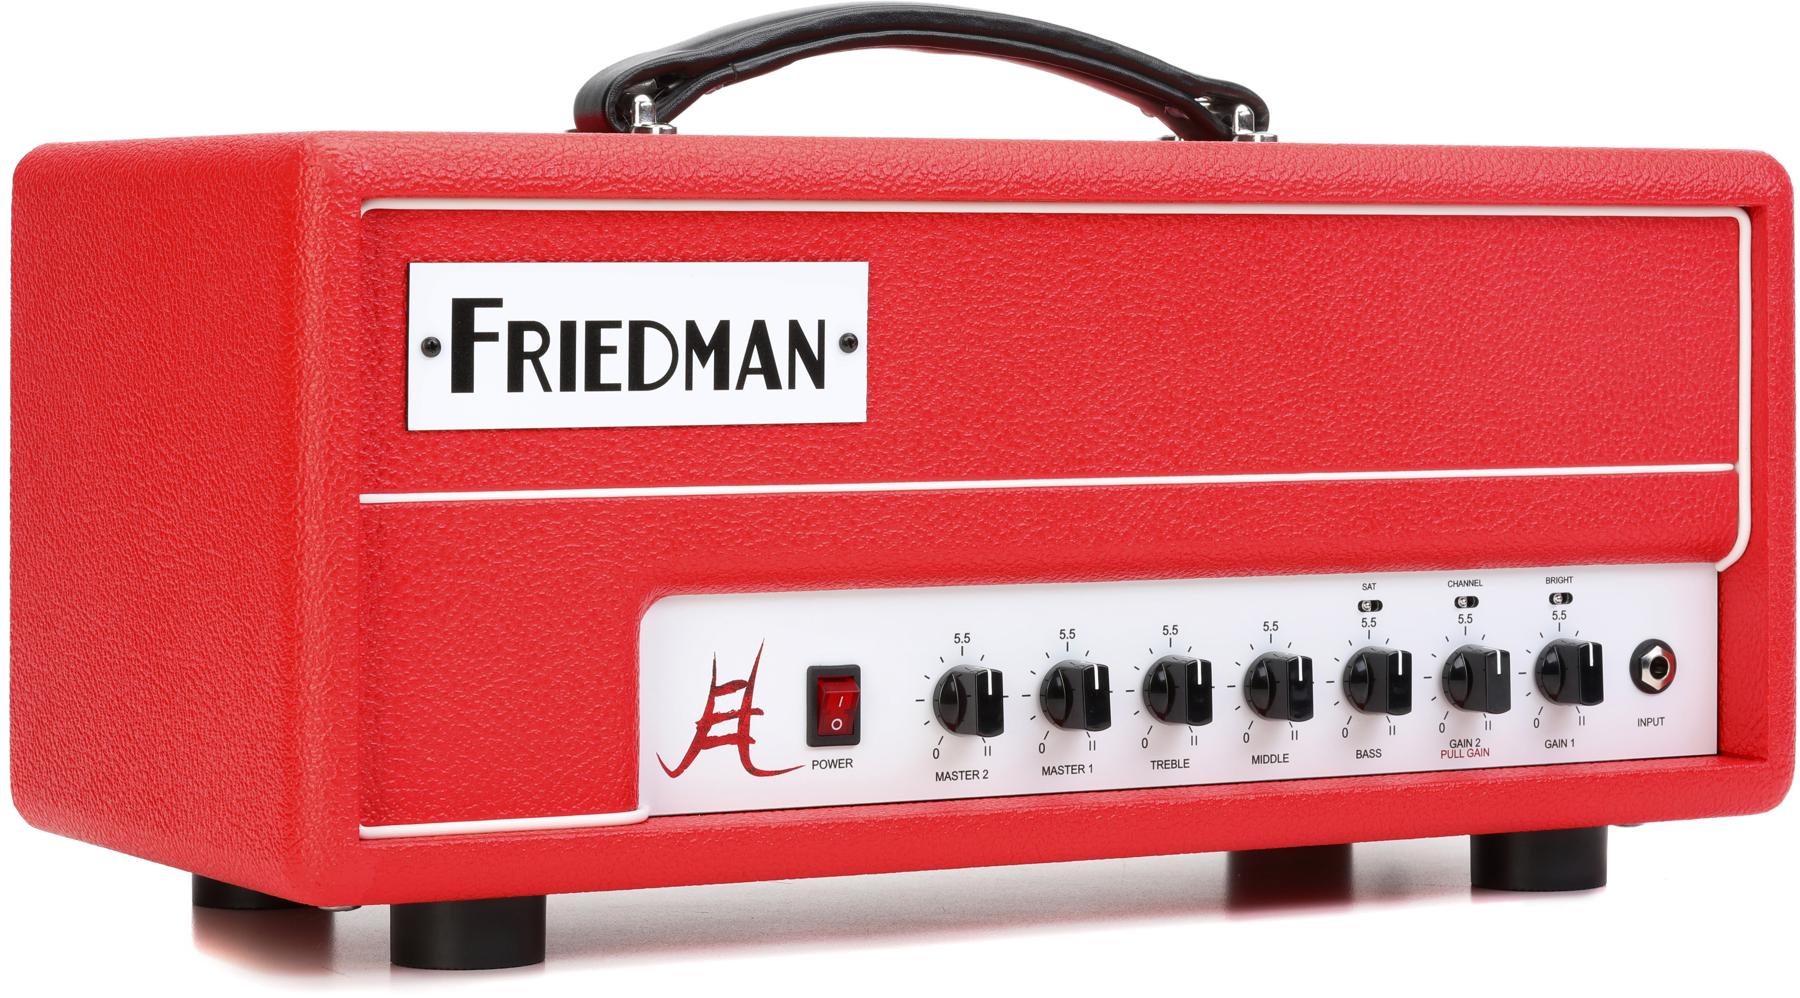 Friedman Guitar Amp